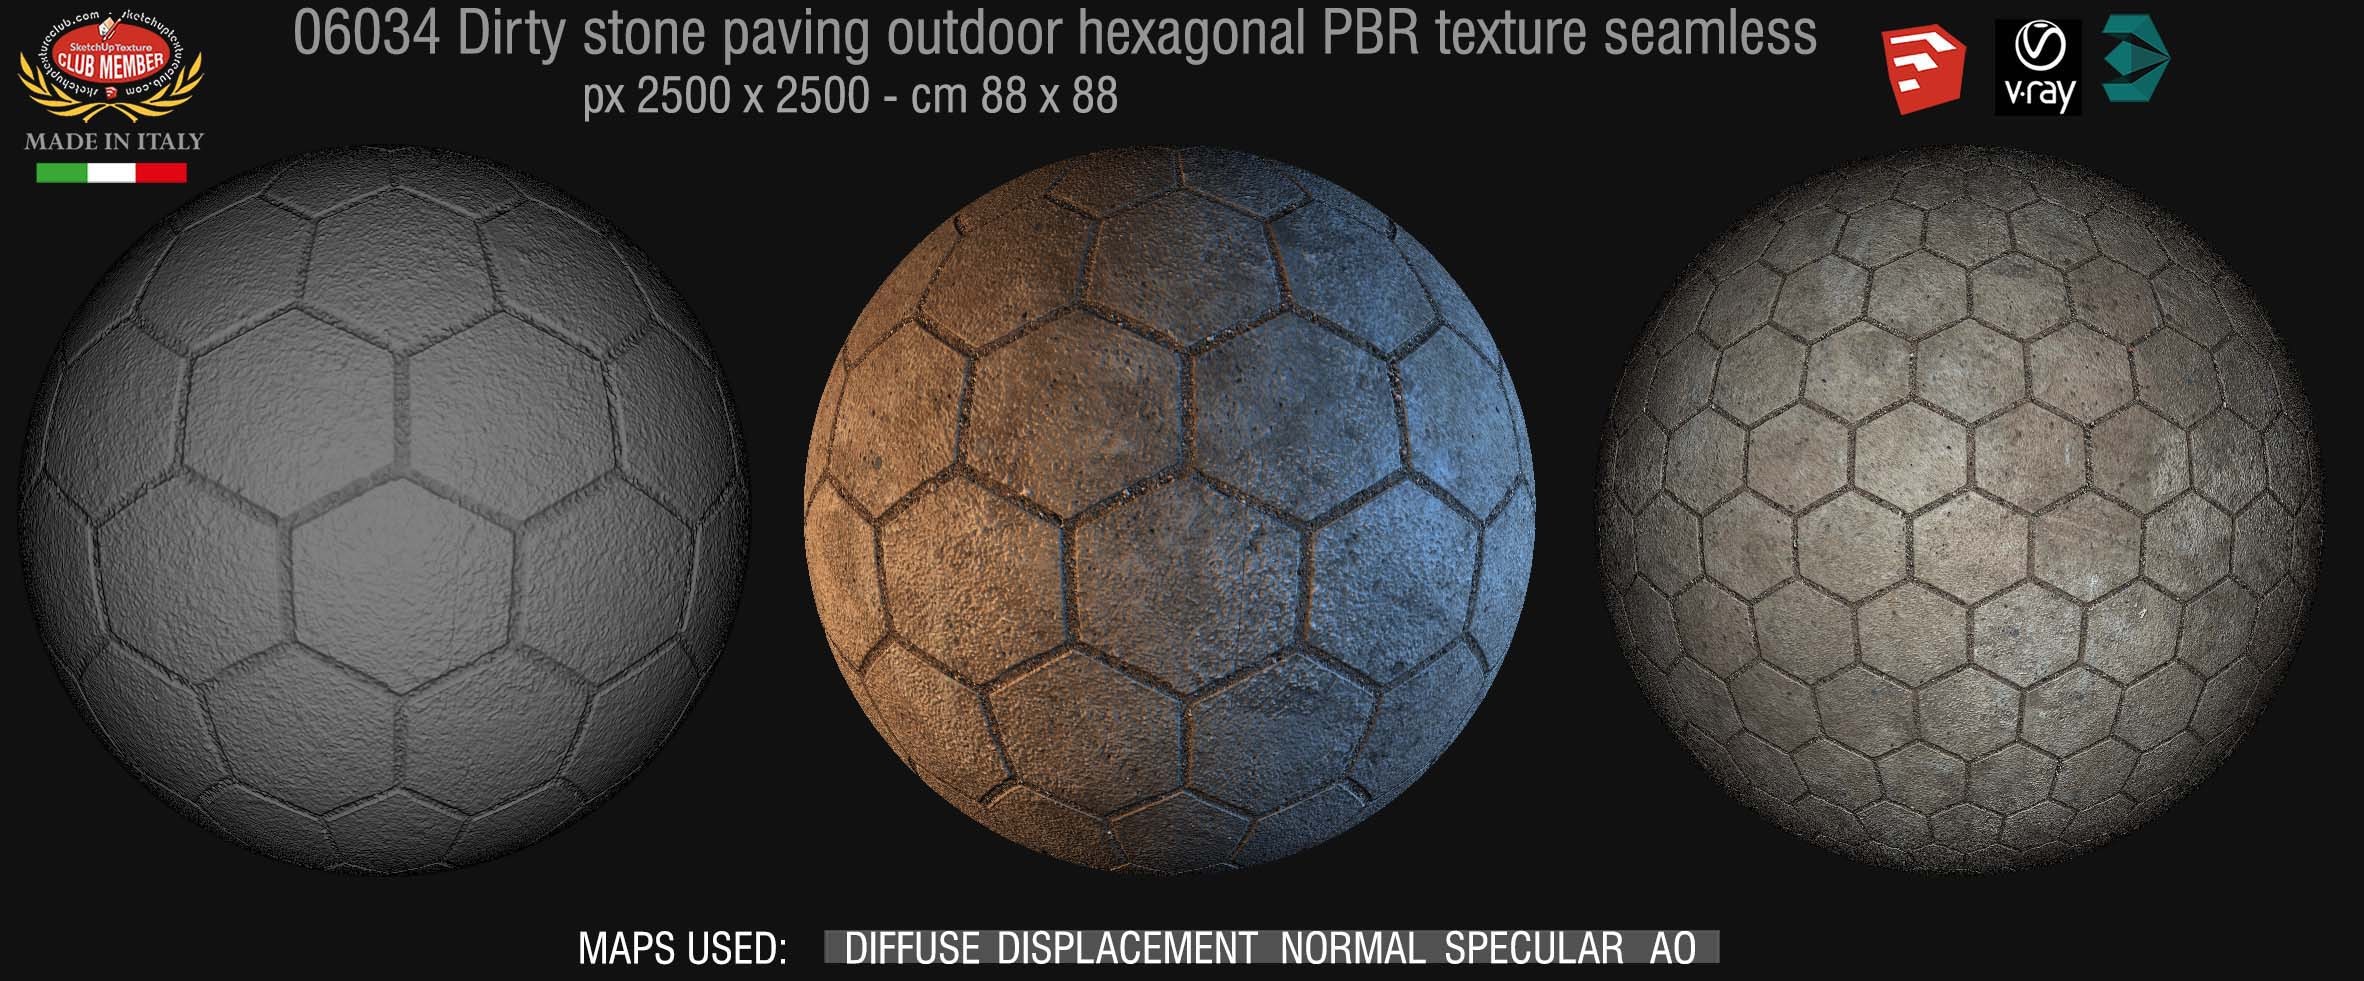 06034 Dirty stone paving outdoor hexagonal texture seamless DEMO